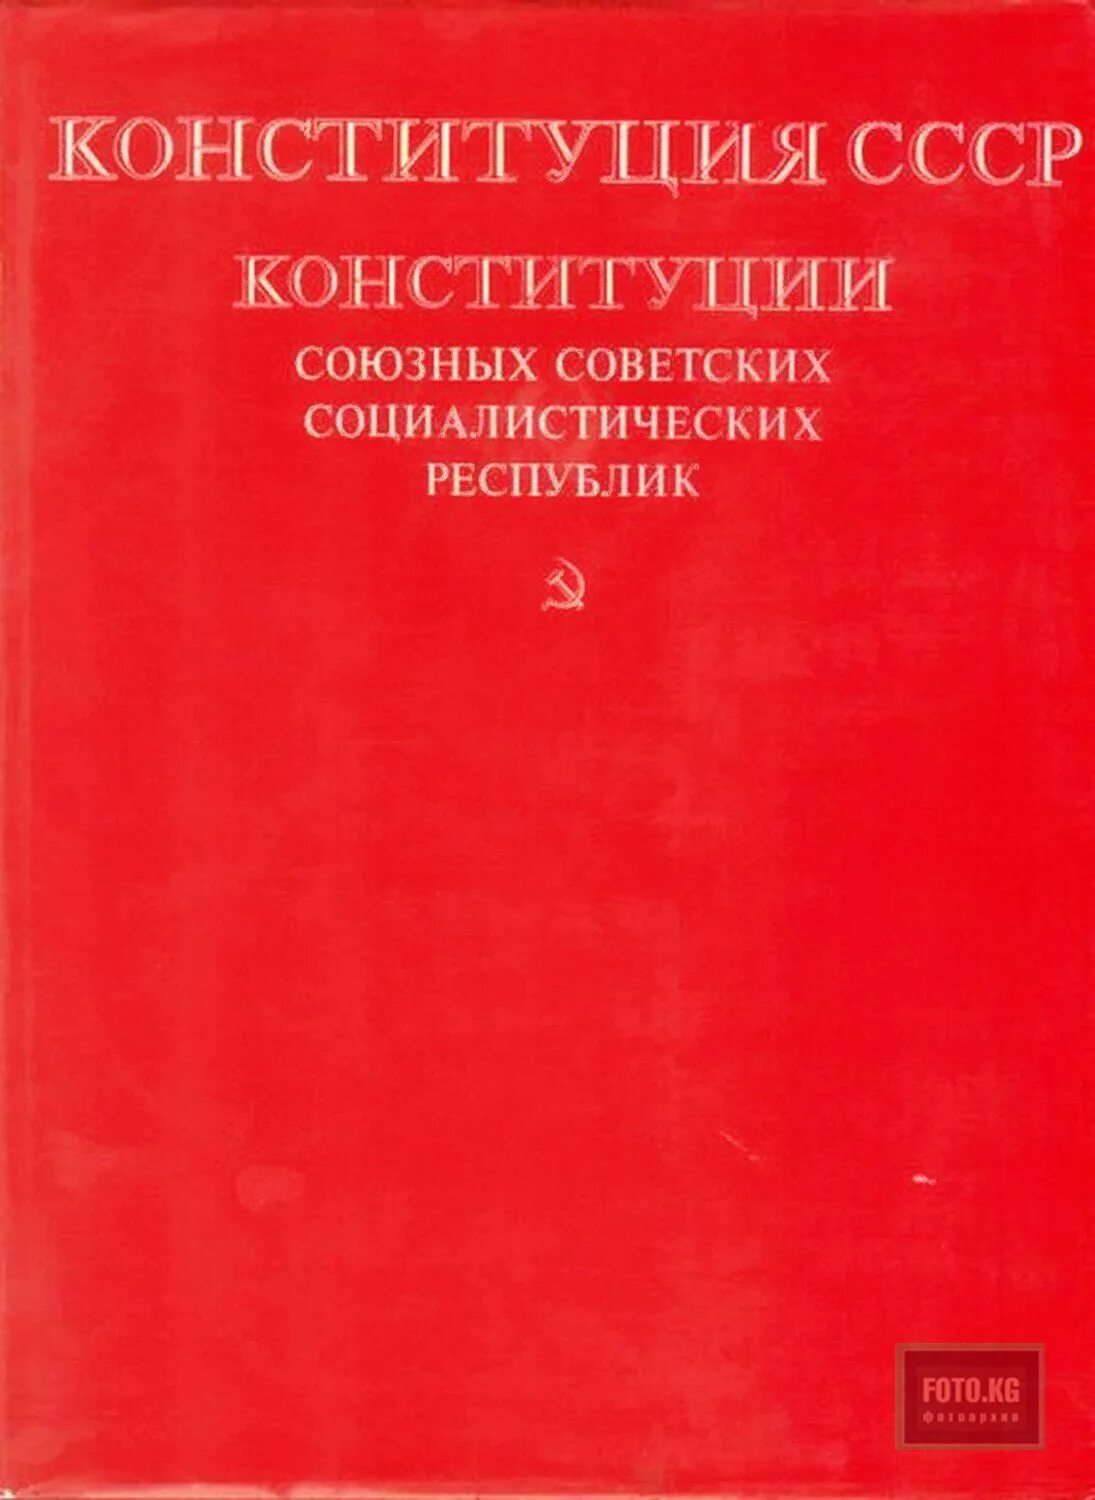 Конституция 1990 года. Конституция СССР 1990. Конституция 1970. Изменения в Конституции СССР 1990. Конституции 1990 г